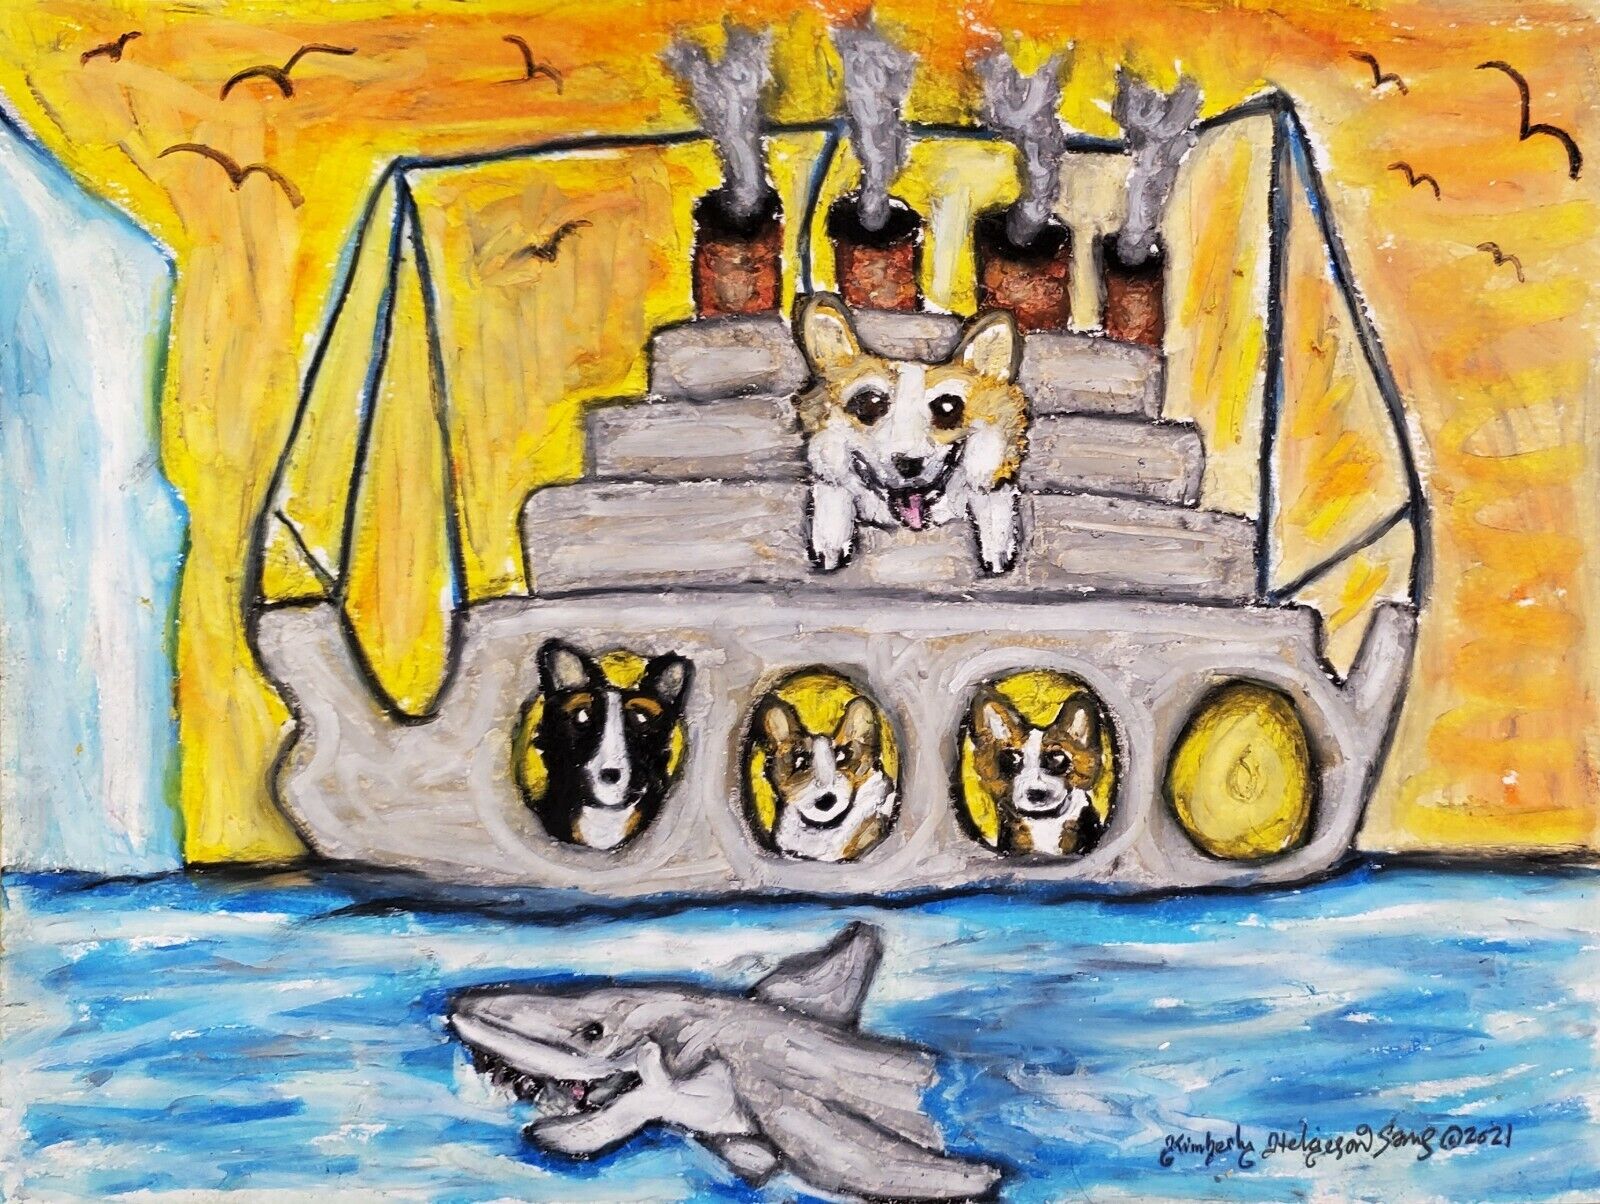 Pembroke Welsh Corgi Titanic Folk Art Print 5 x 7 Signed by Artist KSams Dogs